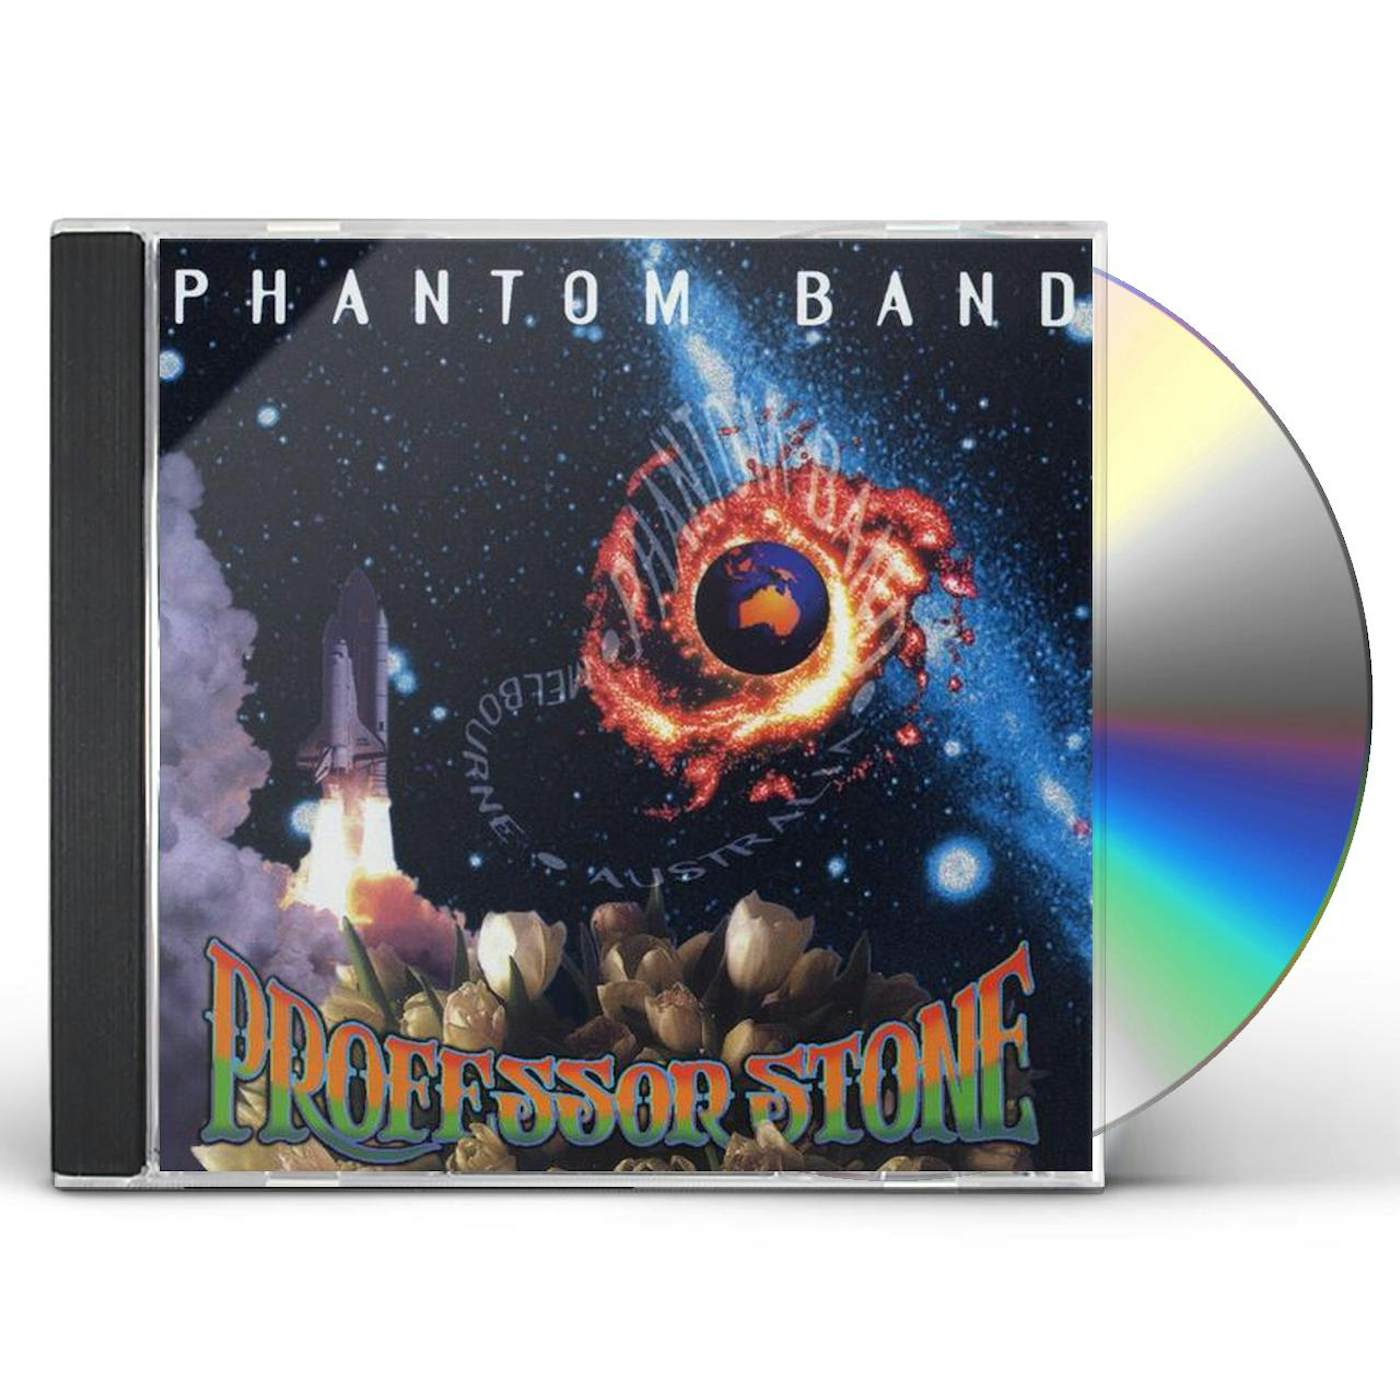 Phantom Band PROFFESSOR STONE CD